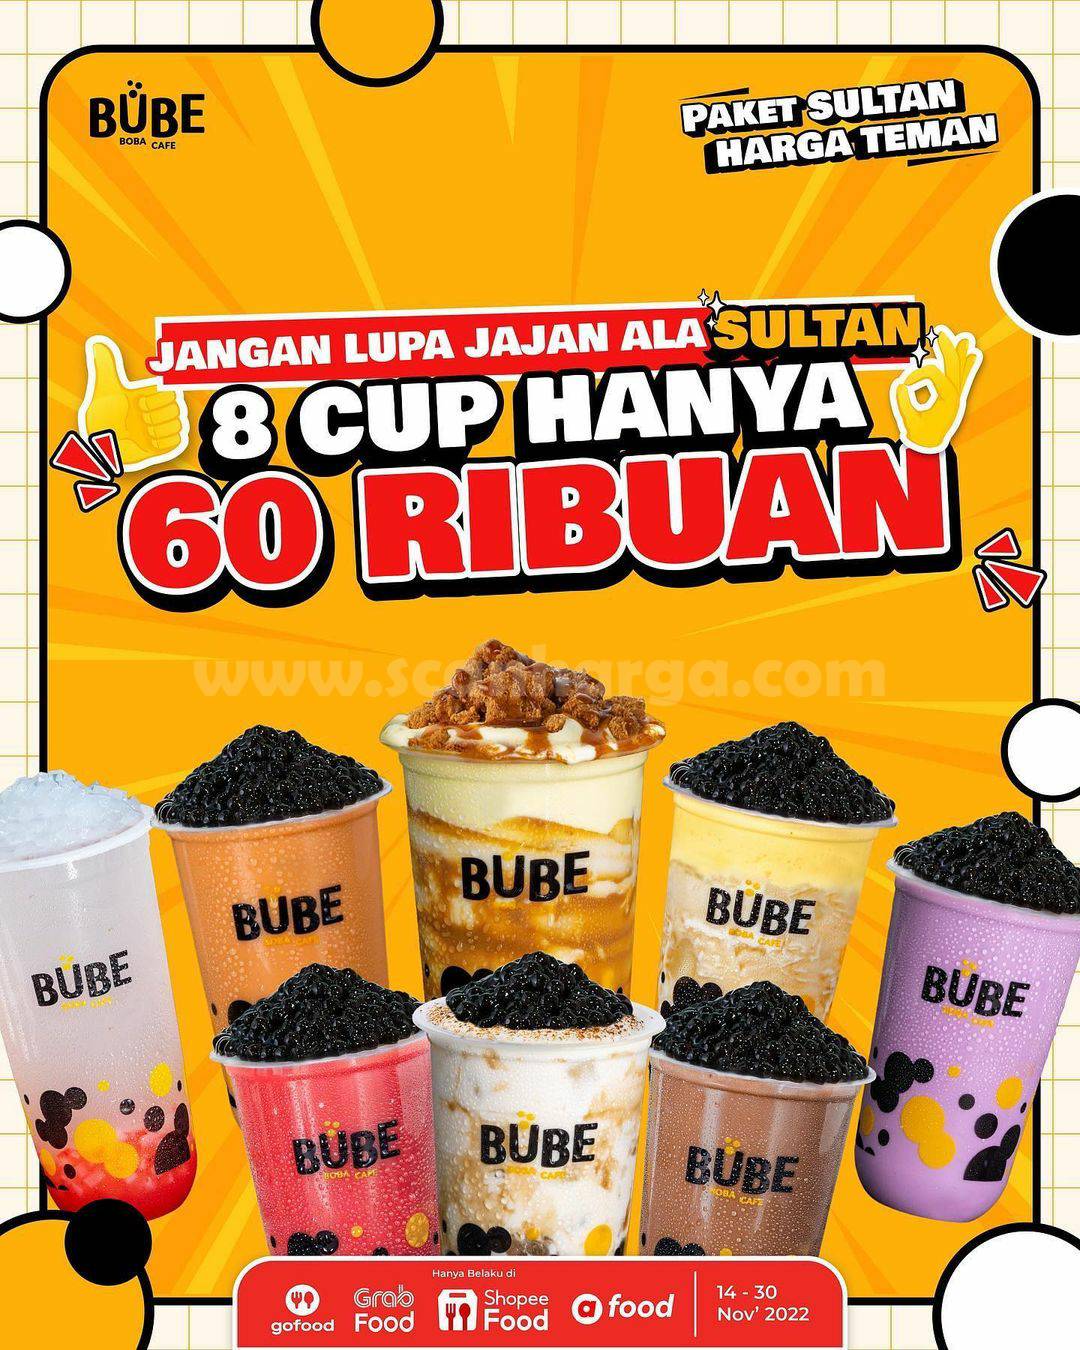 Promo BUBE Paket SULTAN - Beli 8 Cup hanya Rp 60 Ribu-an